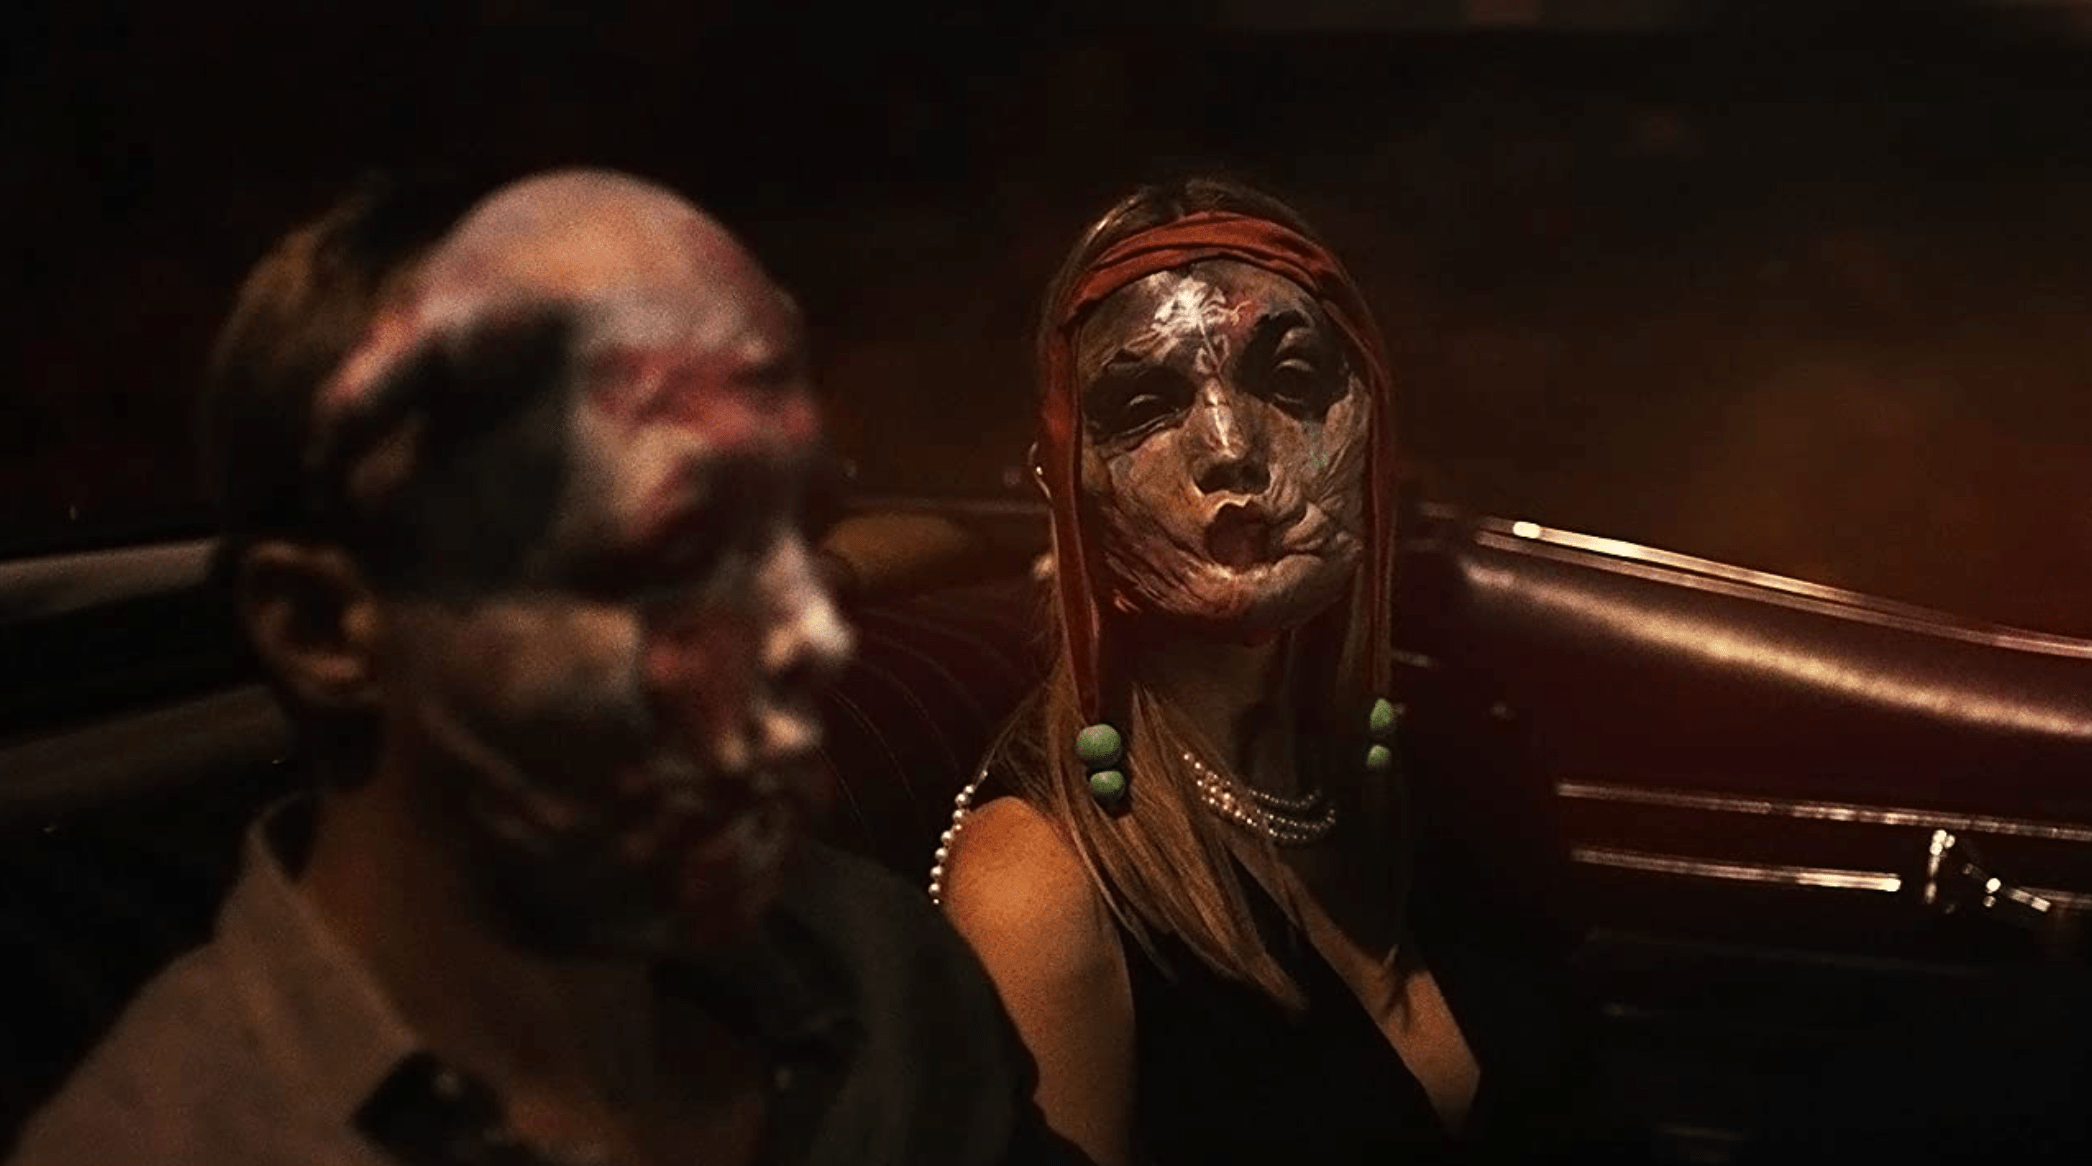 Alexander Skarsgard and Mia Goth in creepy flesh masks